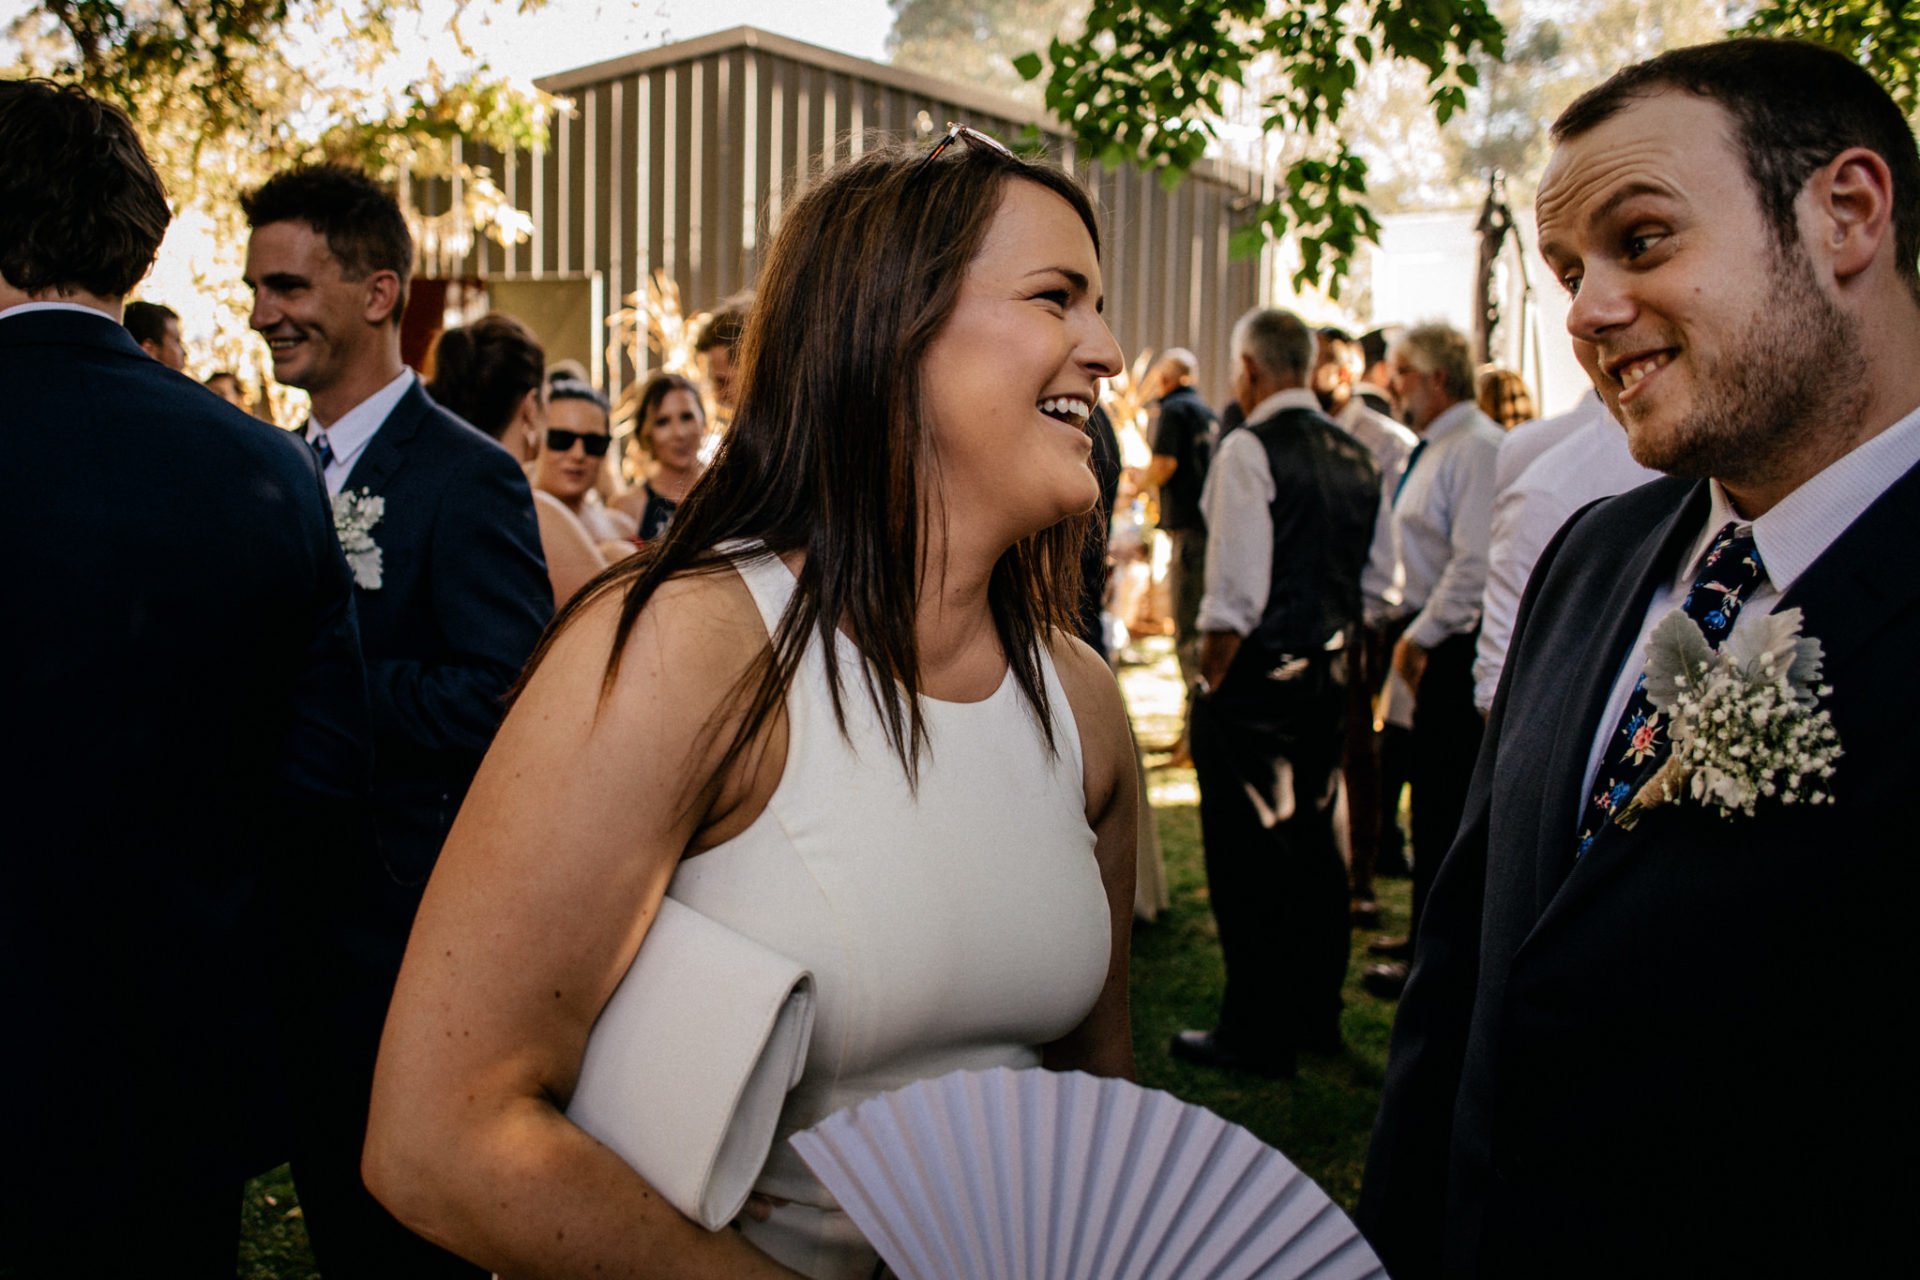 backyard-wedding-australia-melbourne-reception-wedding-guests